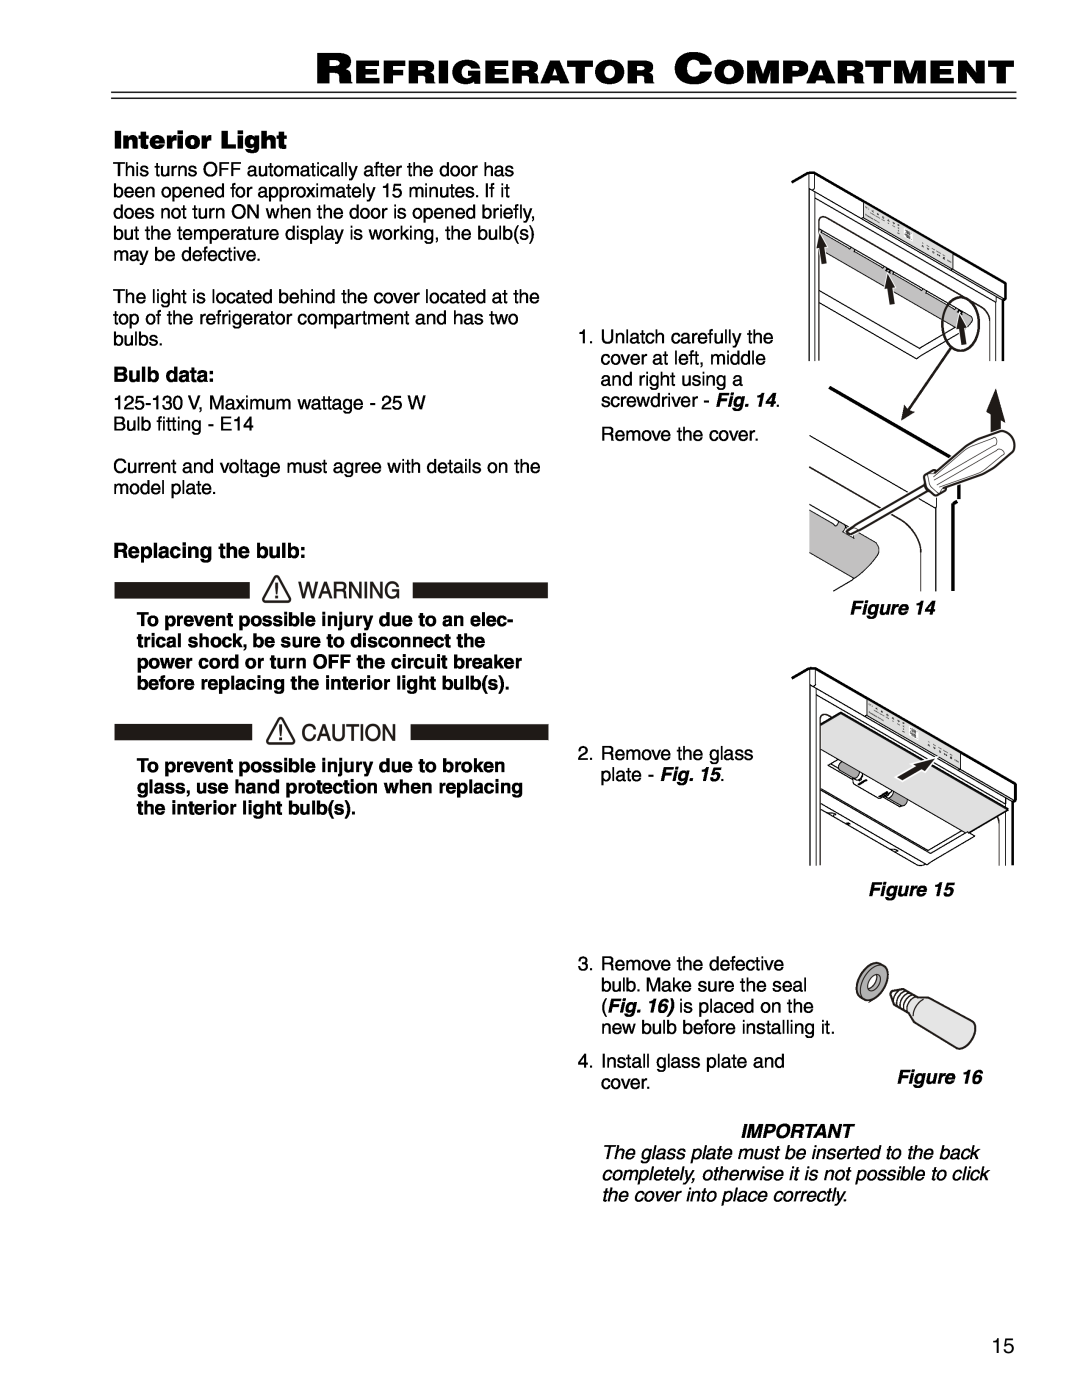 Liebherr CS 1400 7082 663-00 manual Interior Light, Bulb data, Replacing the bulb, Refrigerator Compartment 